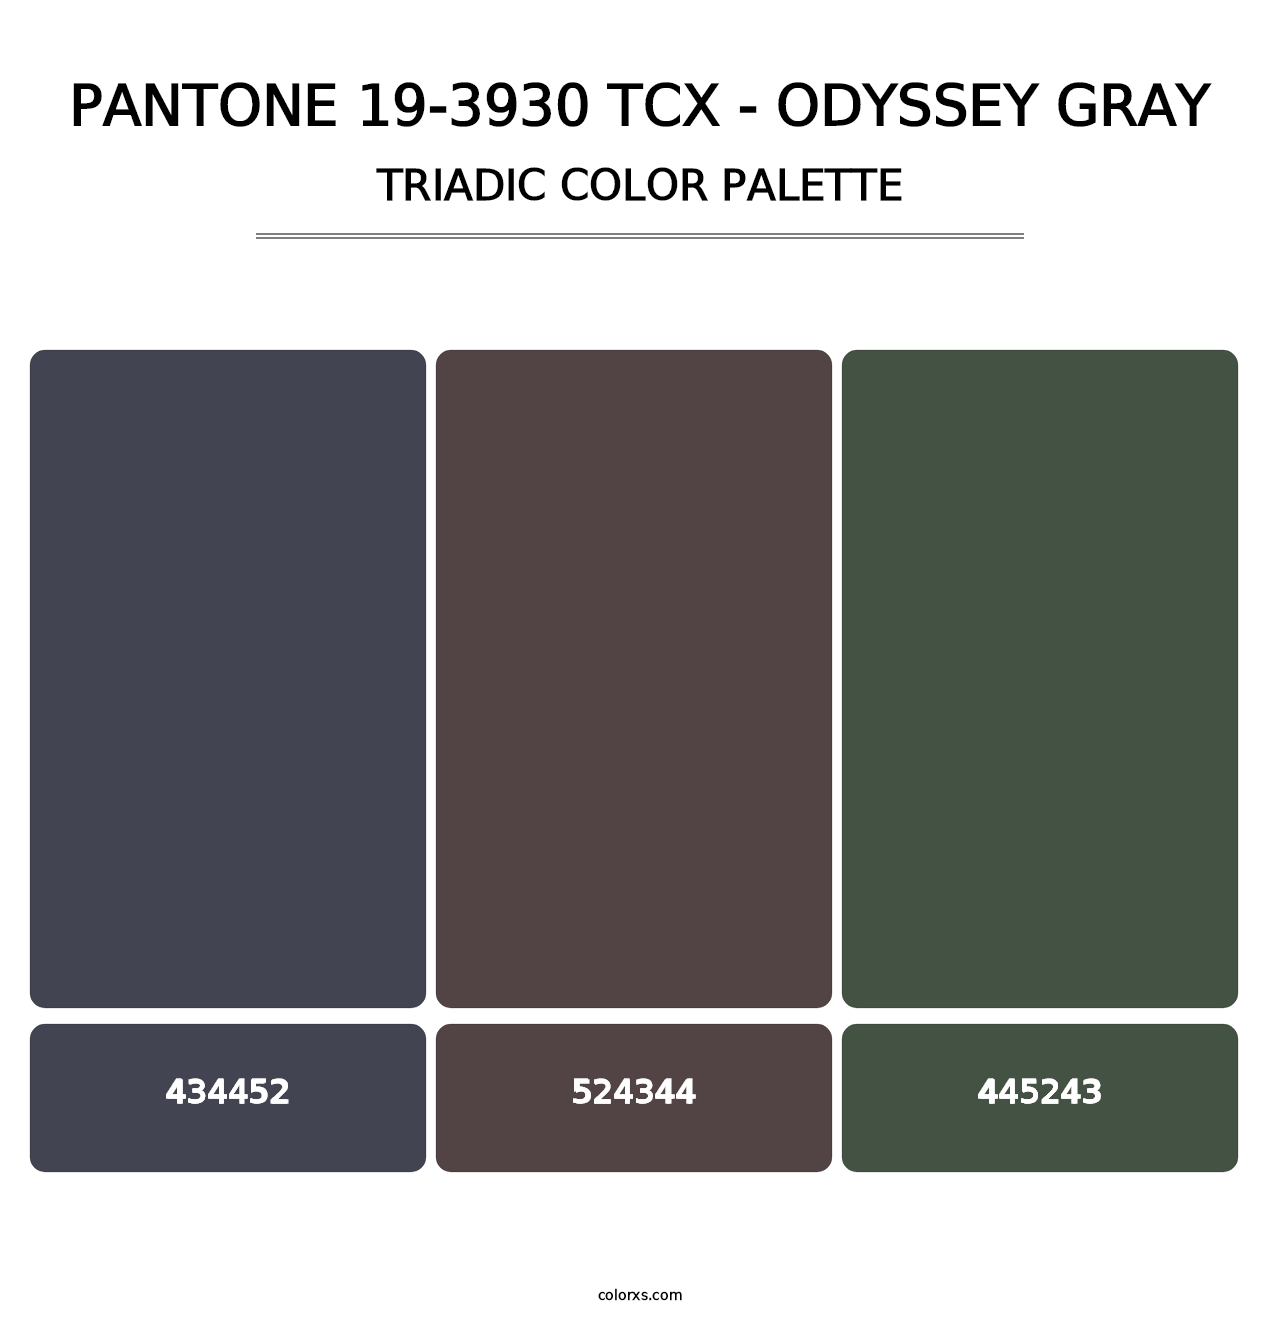 PANTONE 19-3930 TCX - Odyssey Gray - Triadic Color Palette